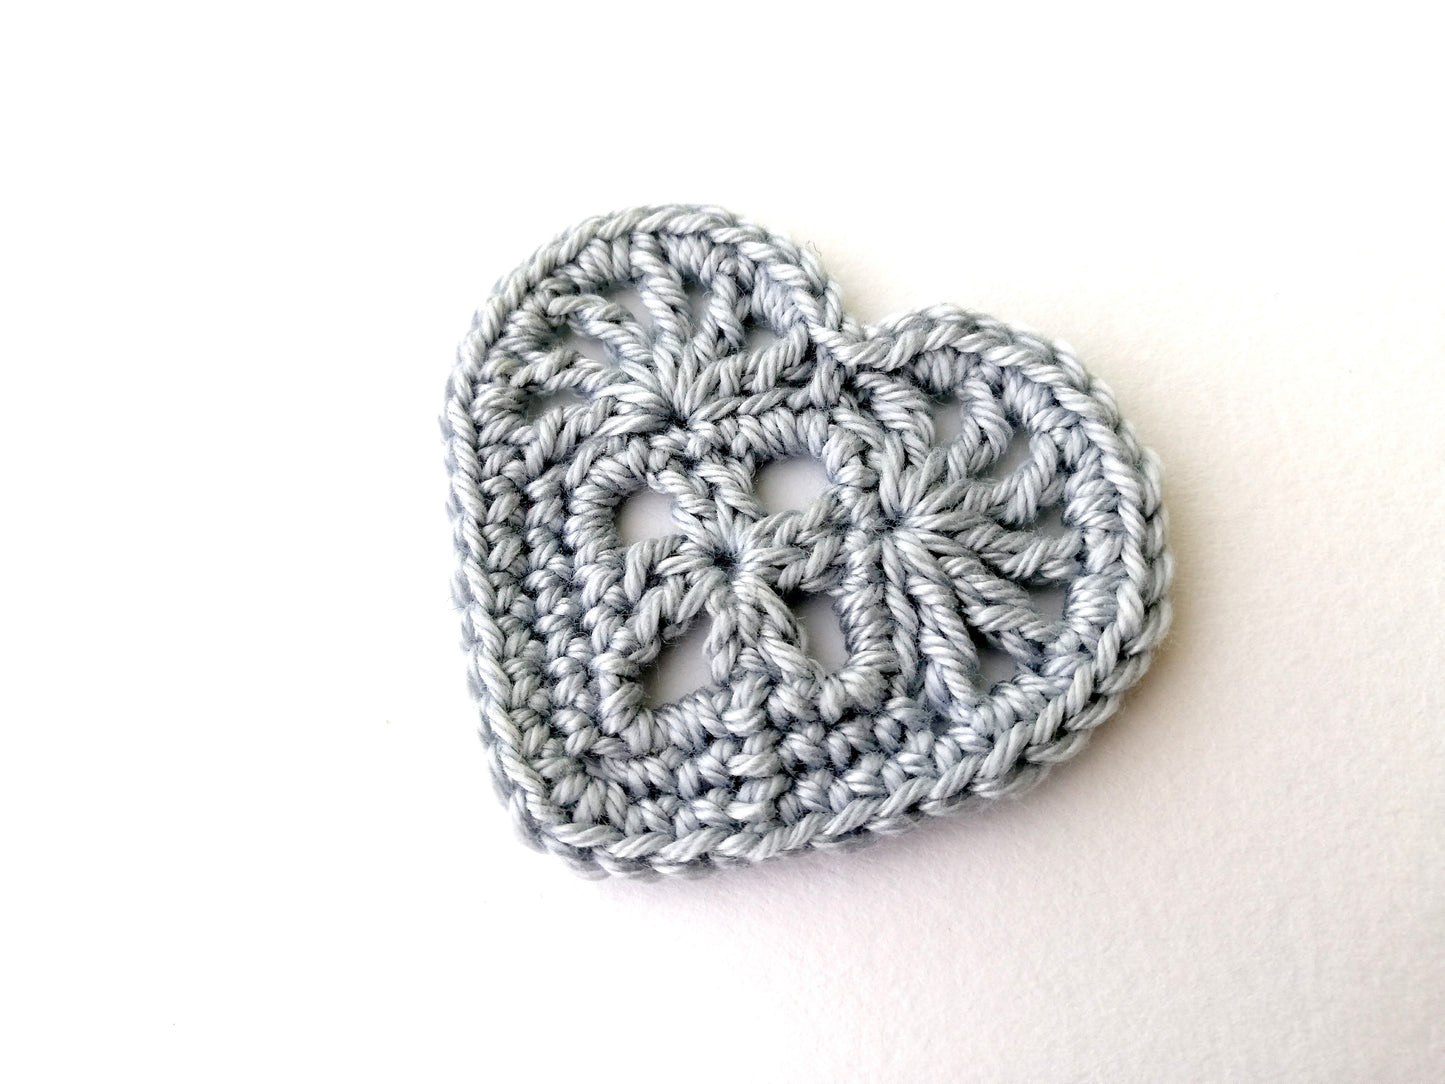 Pattern bundle: 7 crochet patterns with hearts